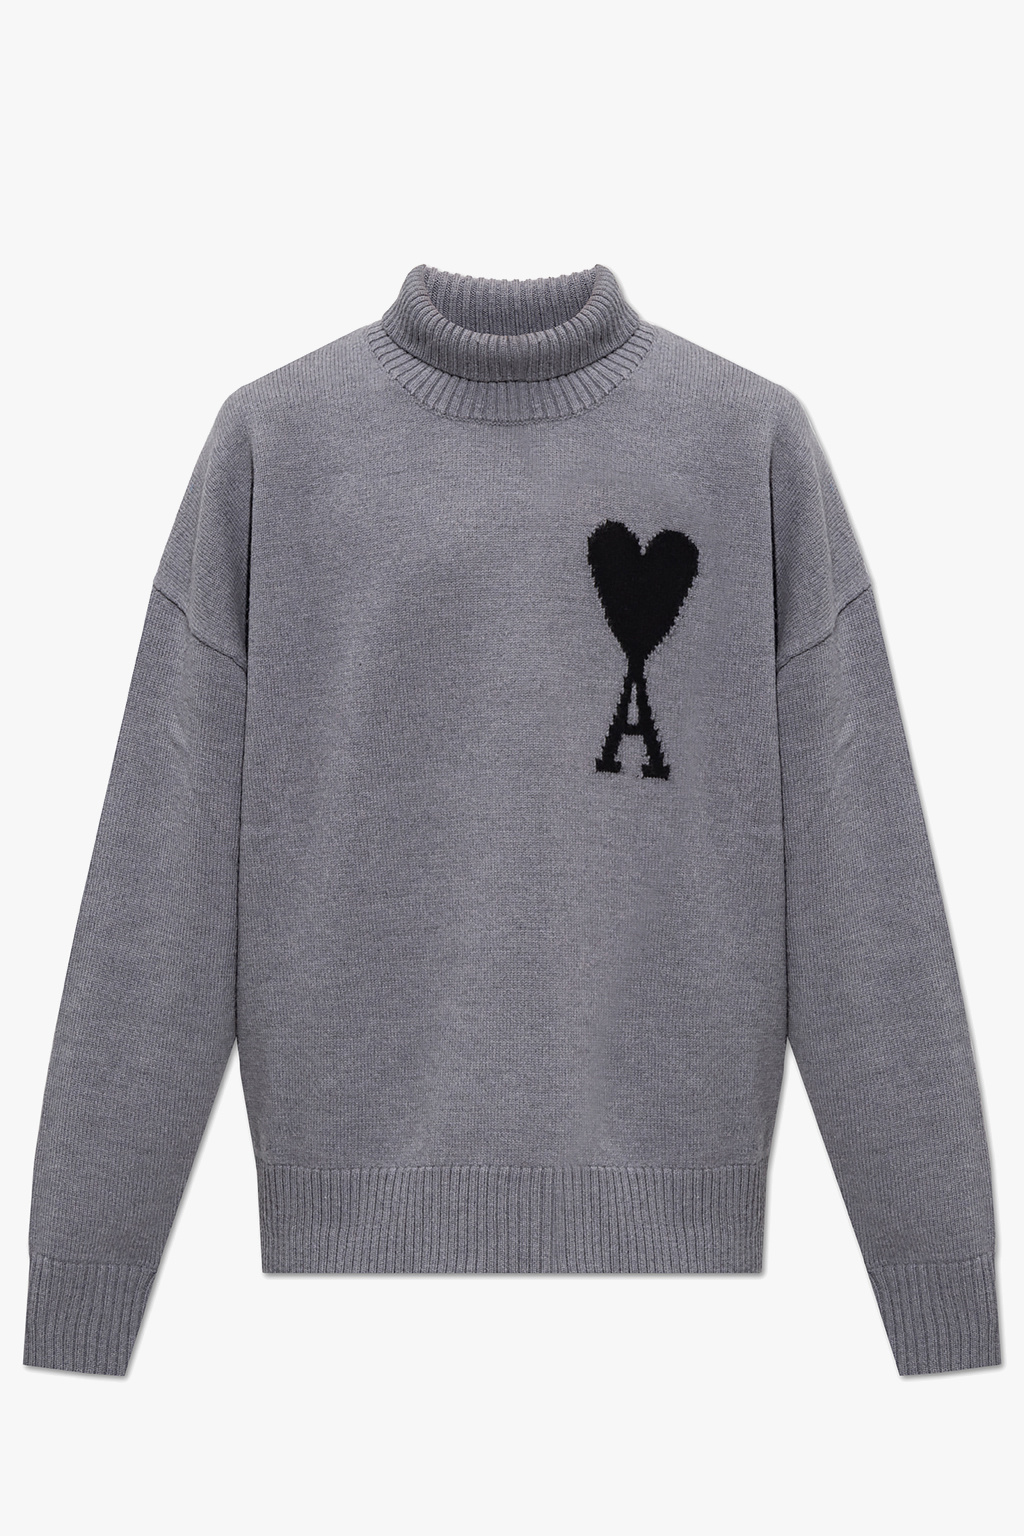 Ami Alexandre Mattiussi Turtleneck sweater with logo | Men's 